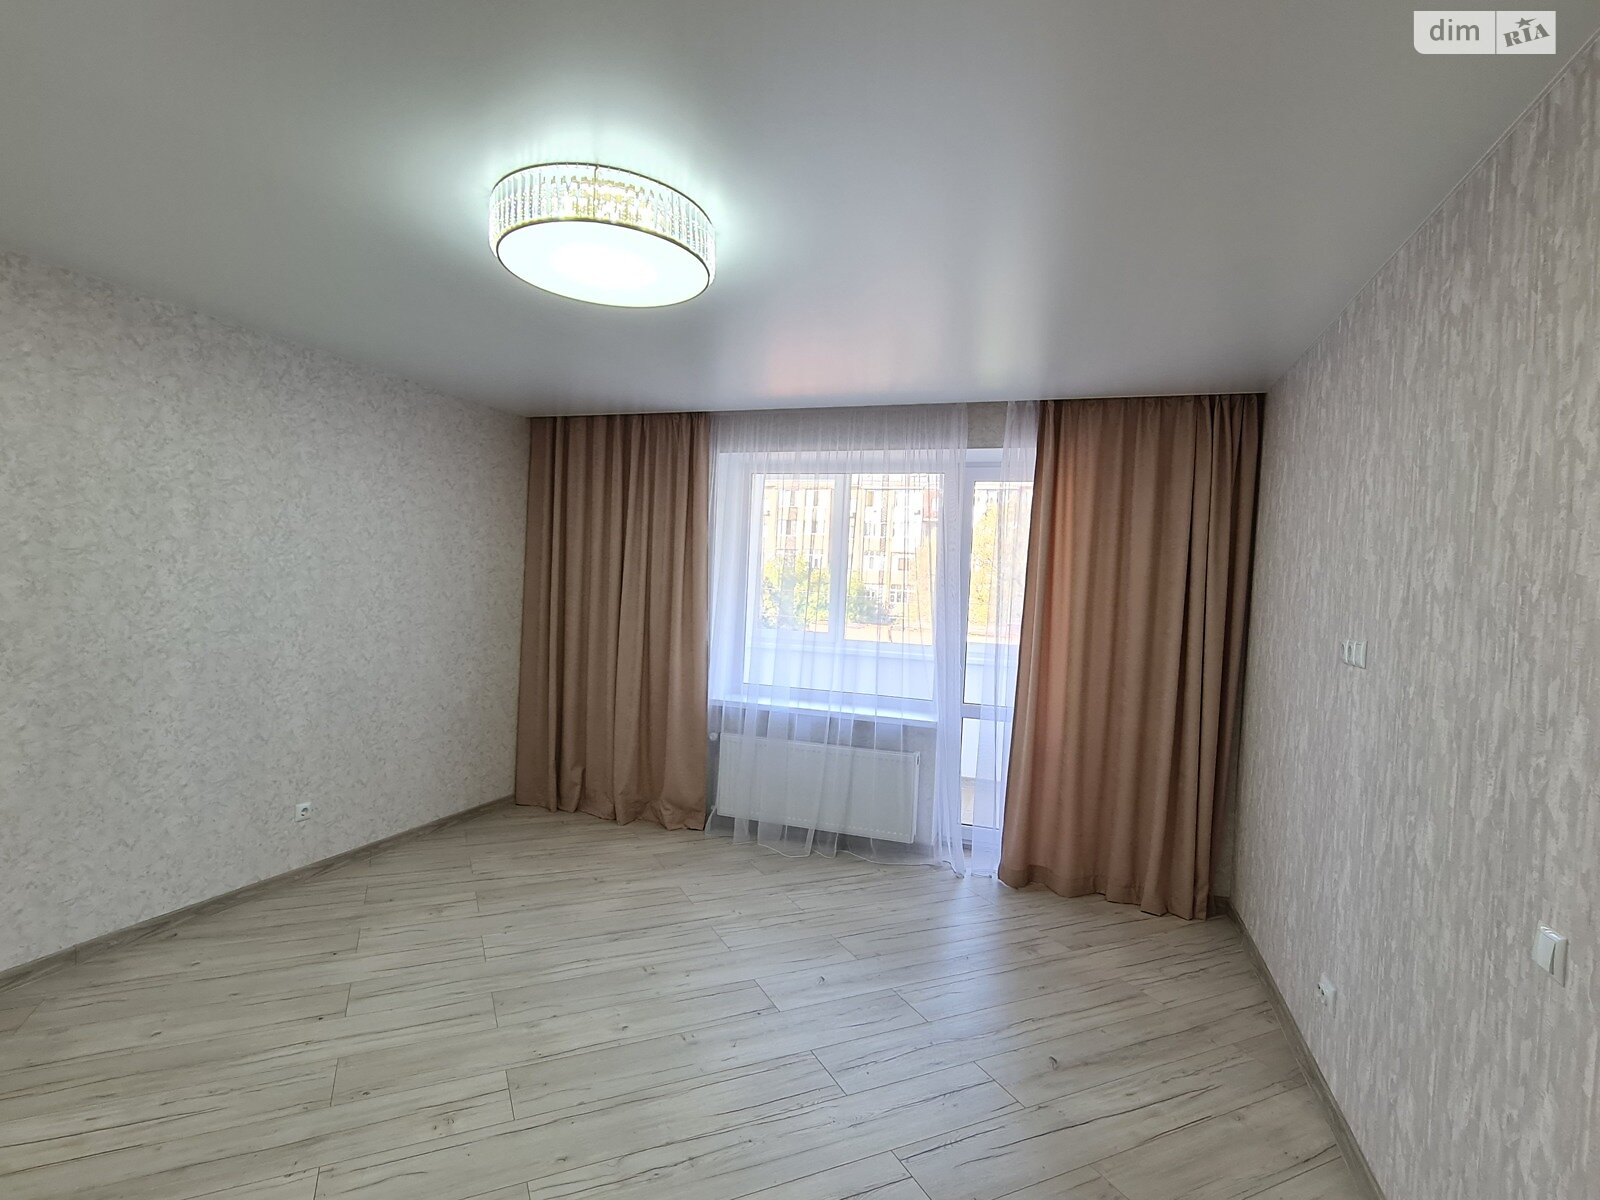 Продаж двокімнатної квартири в Хмельницькому, на просп. Миру 63В, район Виставка фото 1